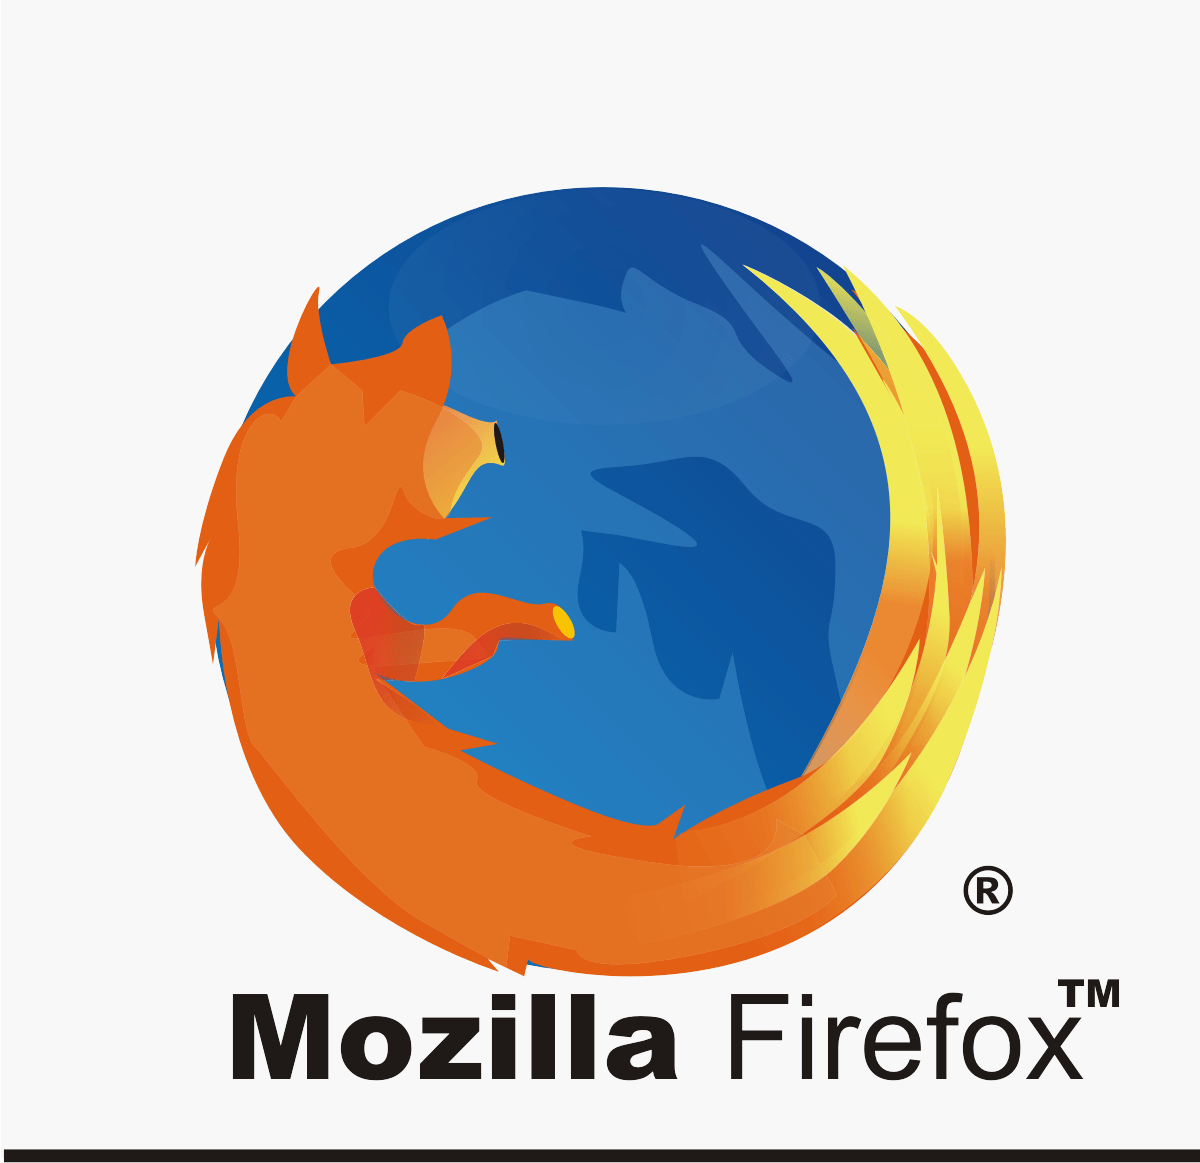 Blue Firefox Logo - My TUTORIAL Arena: LOGOGRAPHY: DESIGN FIREFOX LOGO WITH CORELDRAW